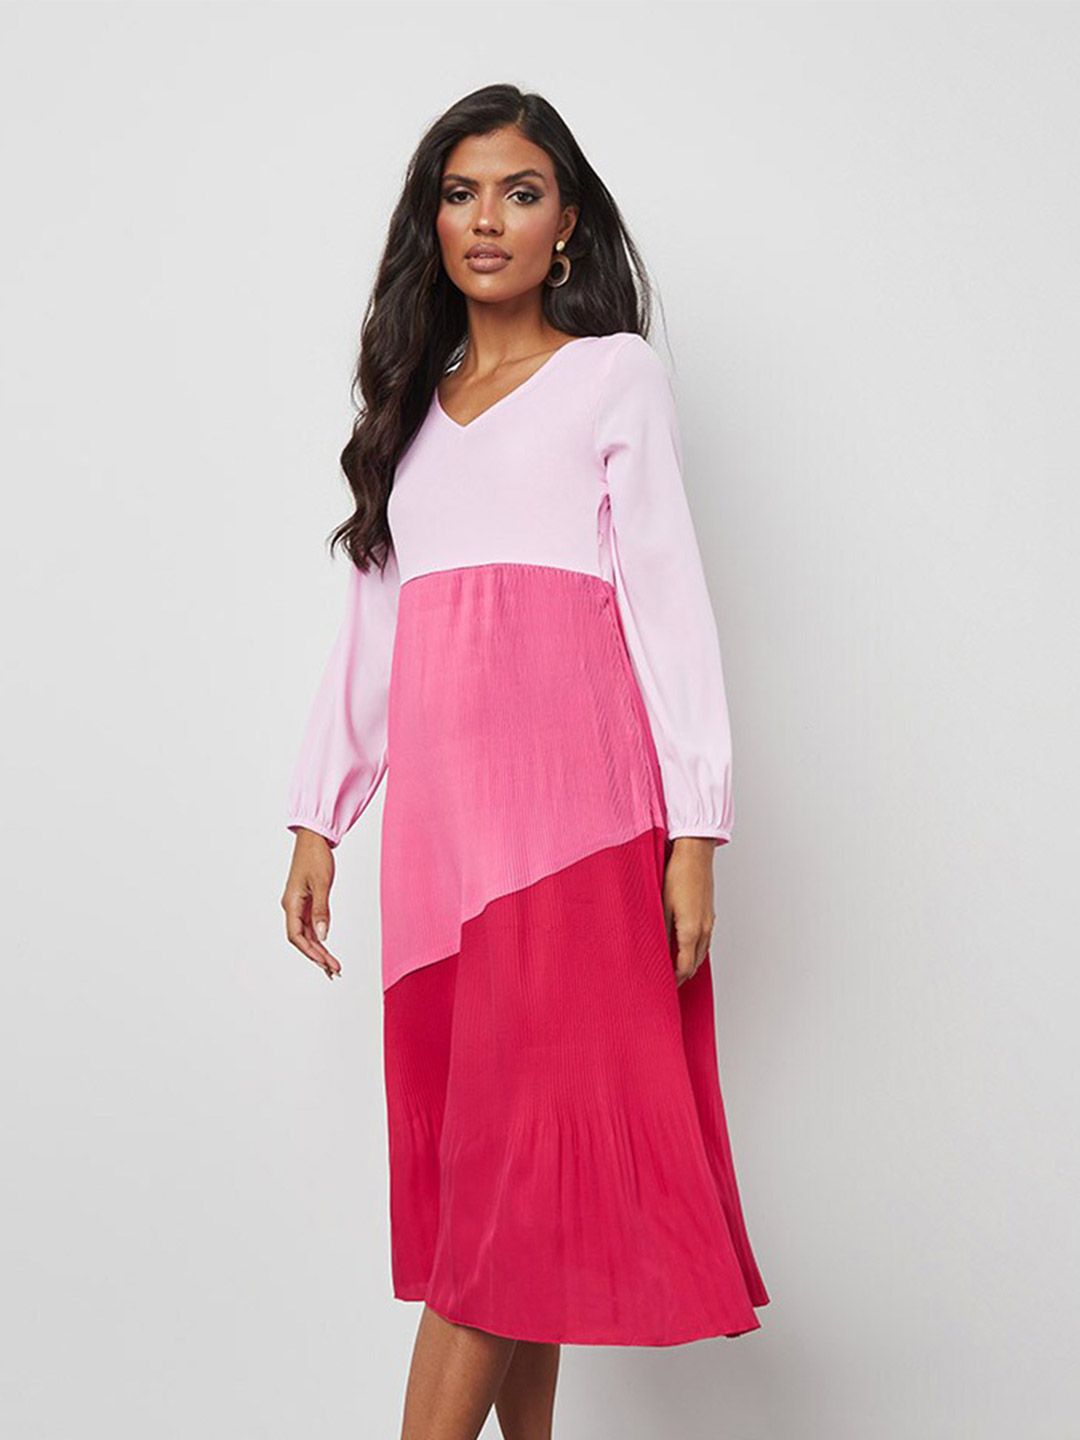 Styli Pink Colourblocked A-Line Midi Dress Price in India